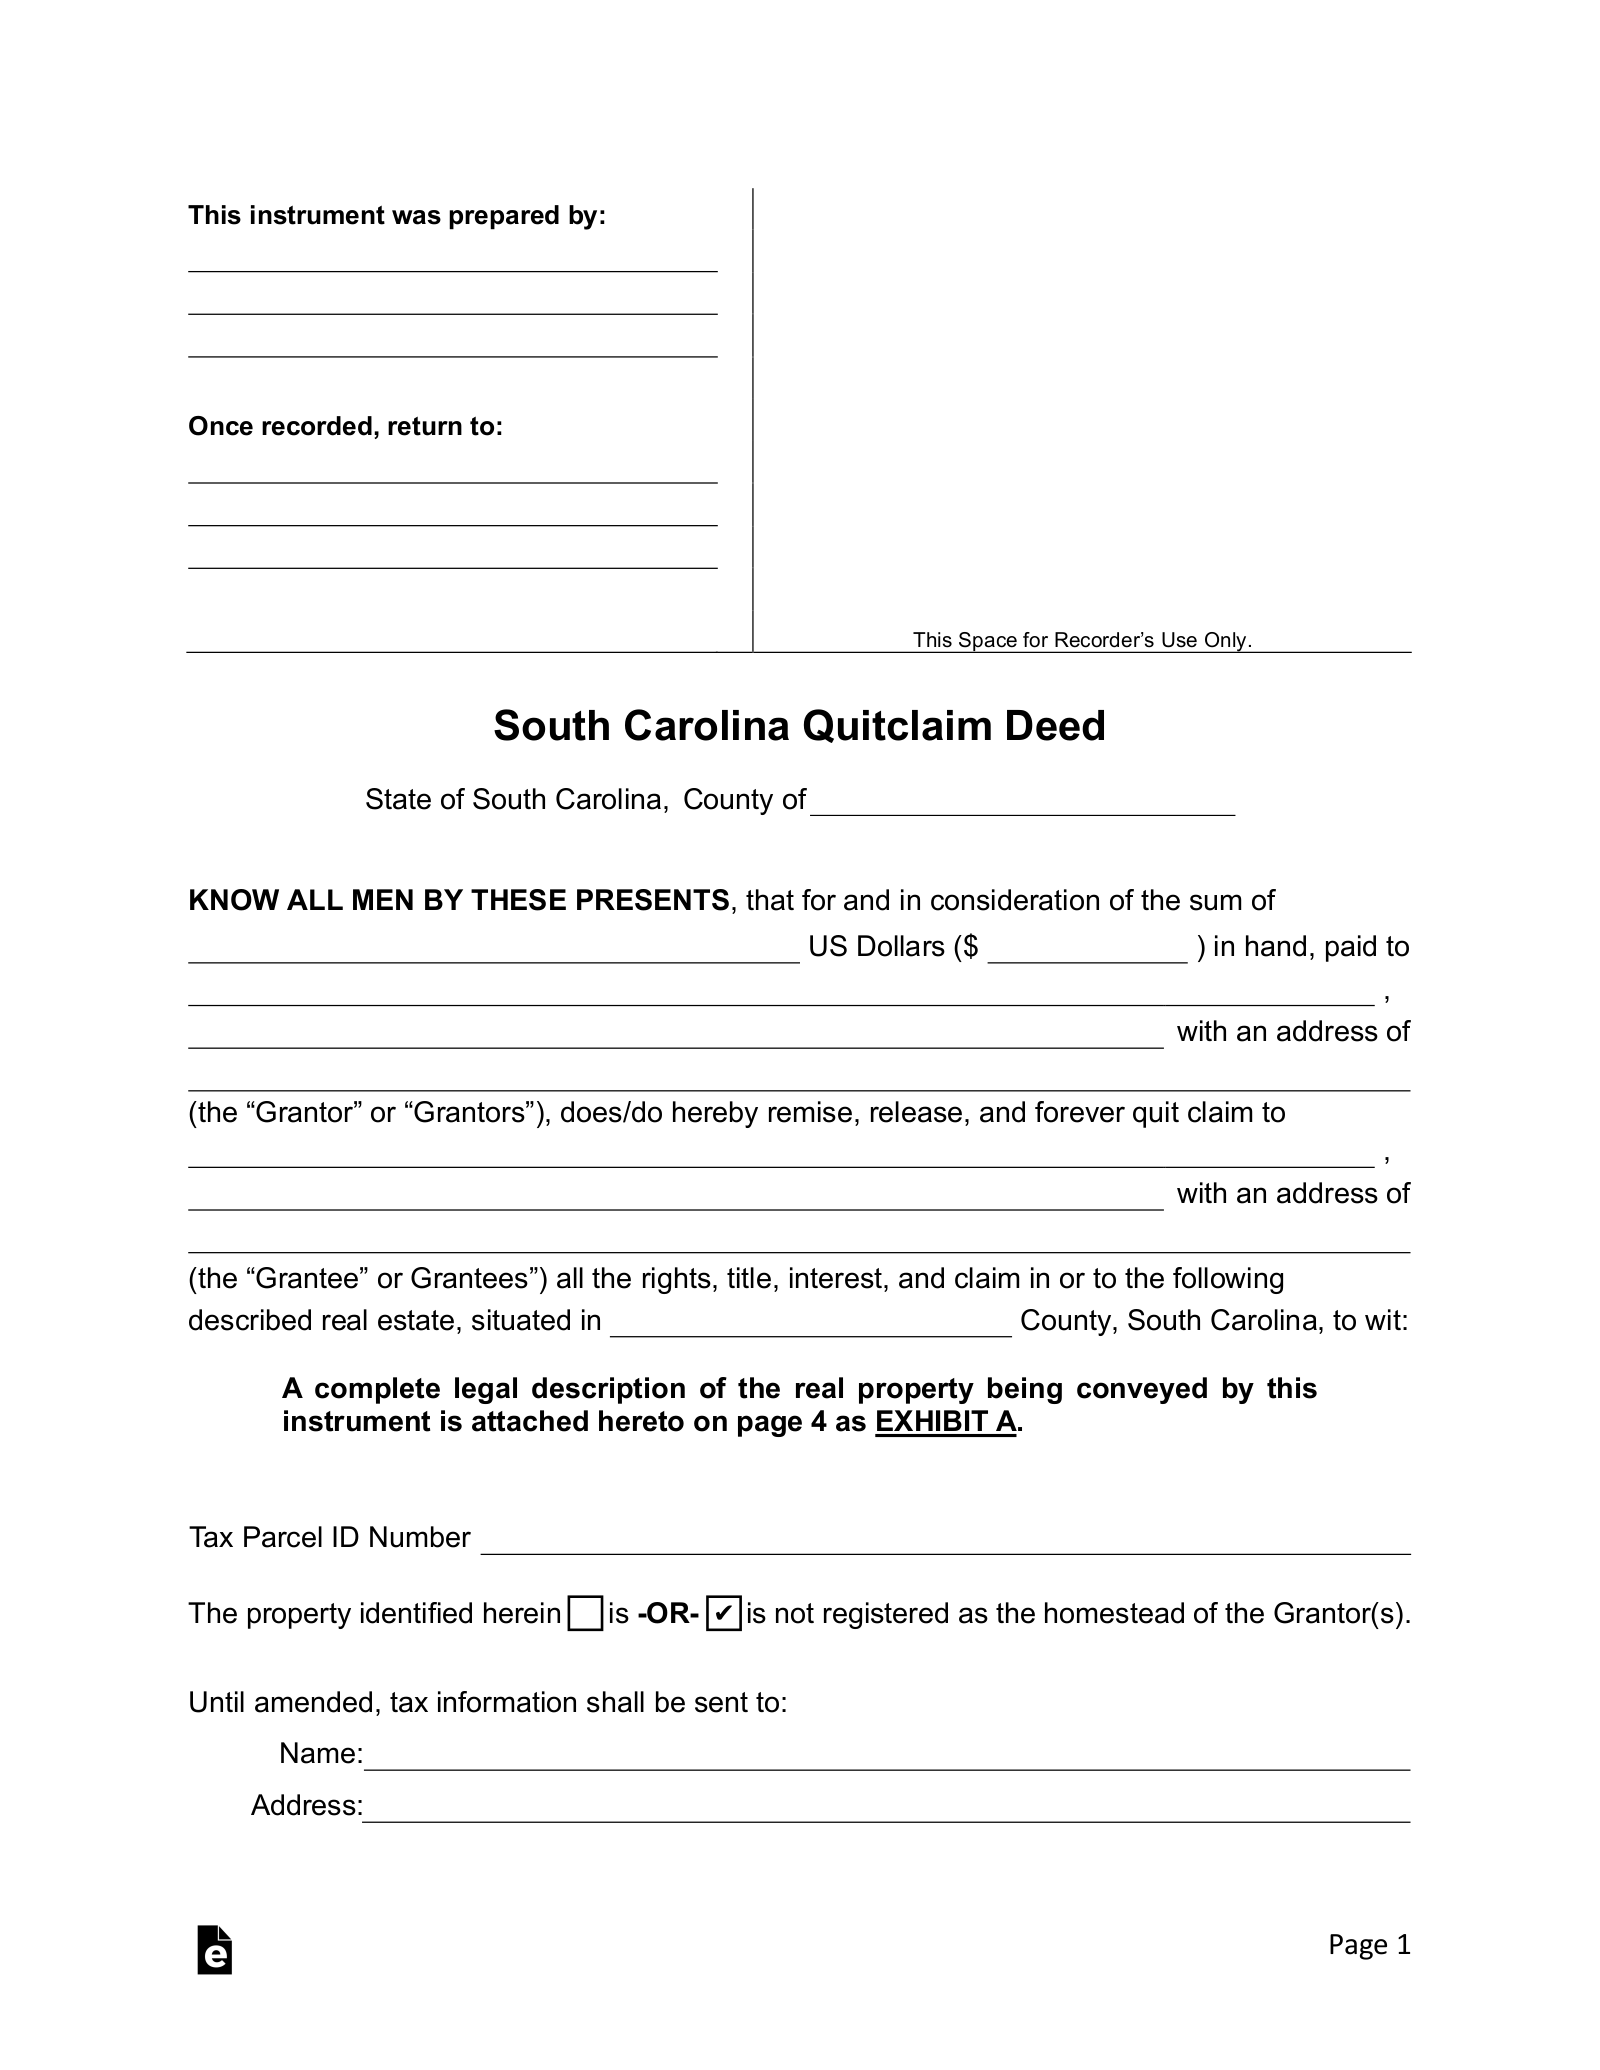 South Carolina Quit Claim Deed Form